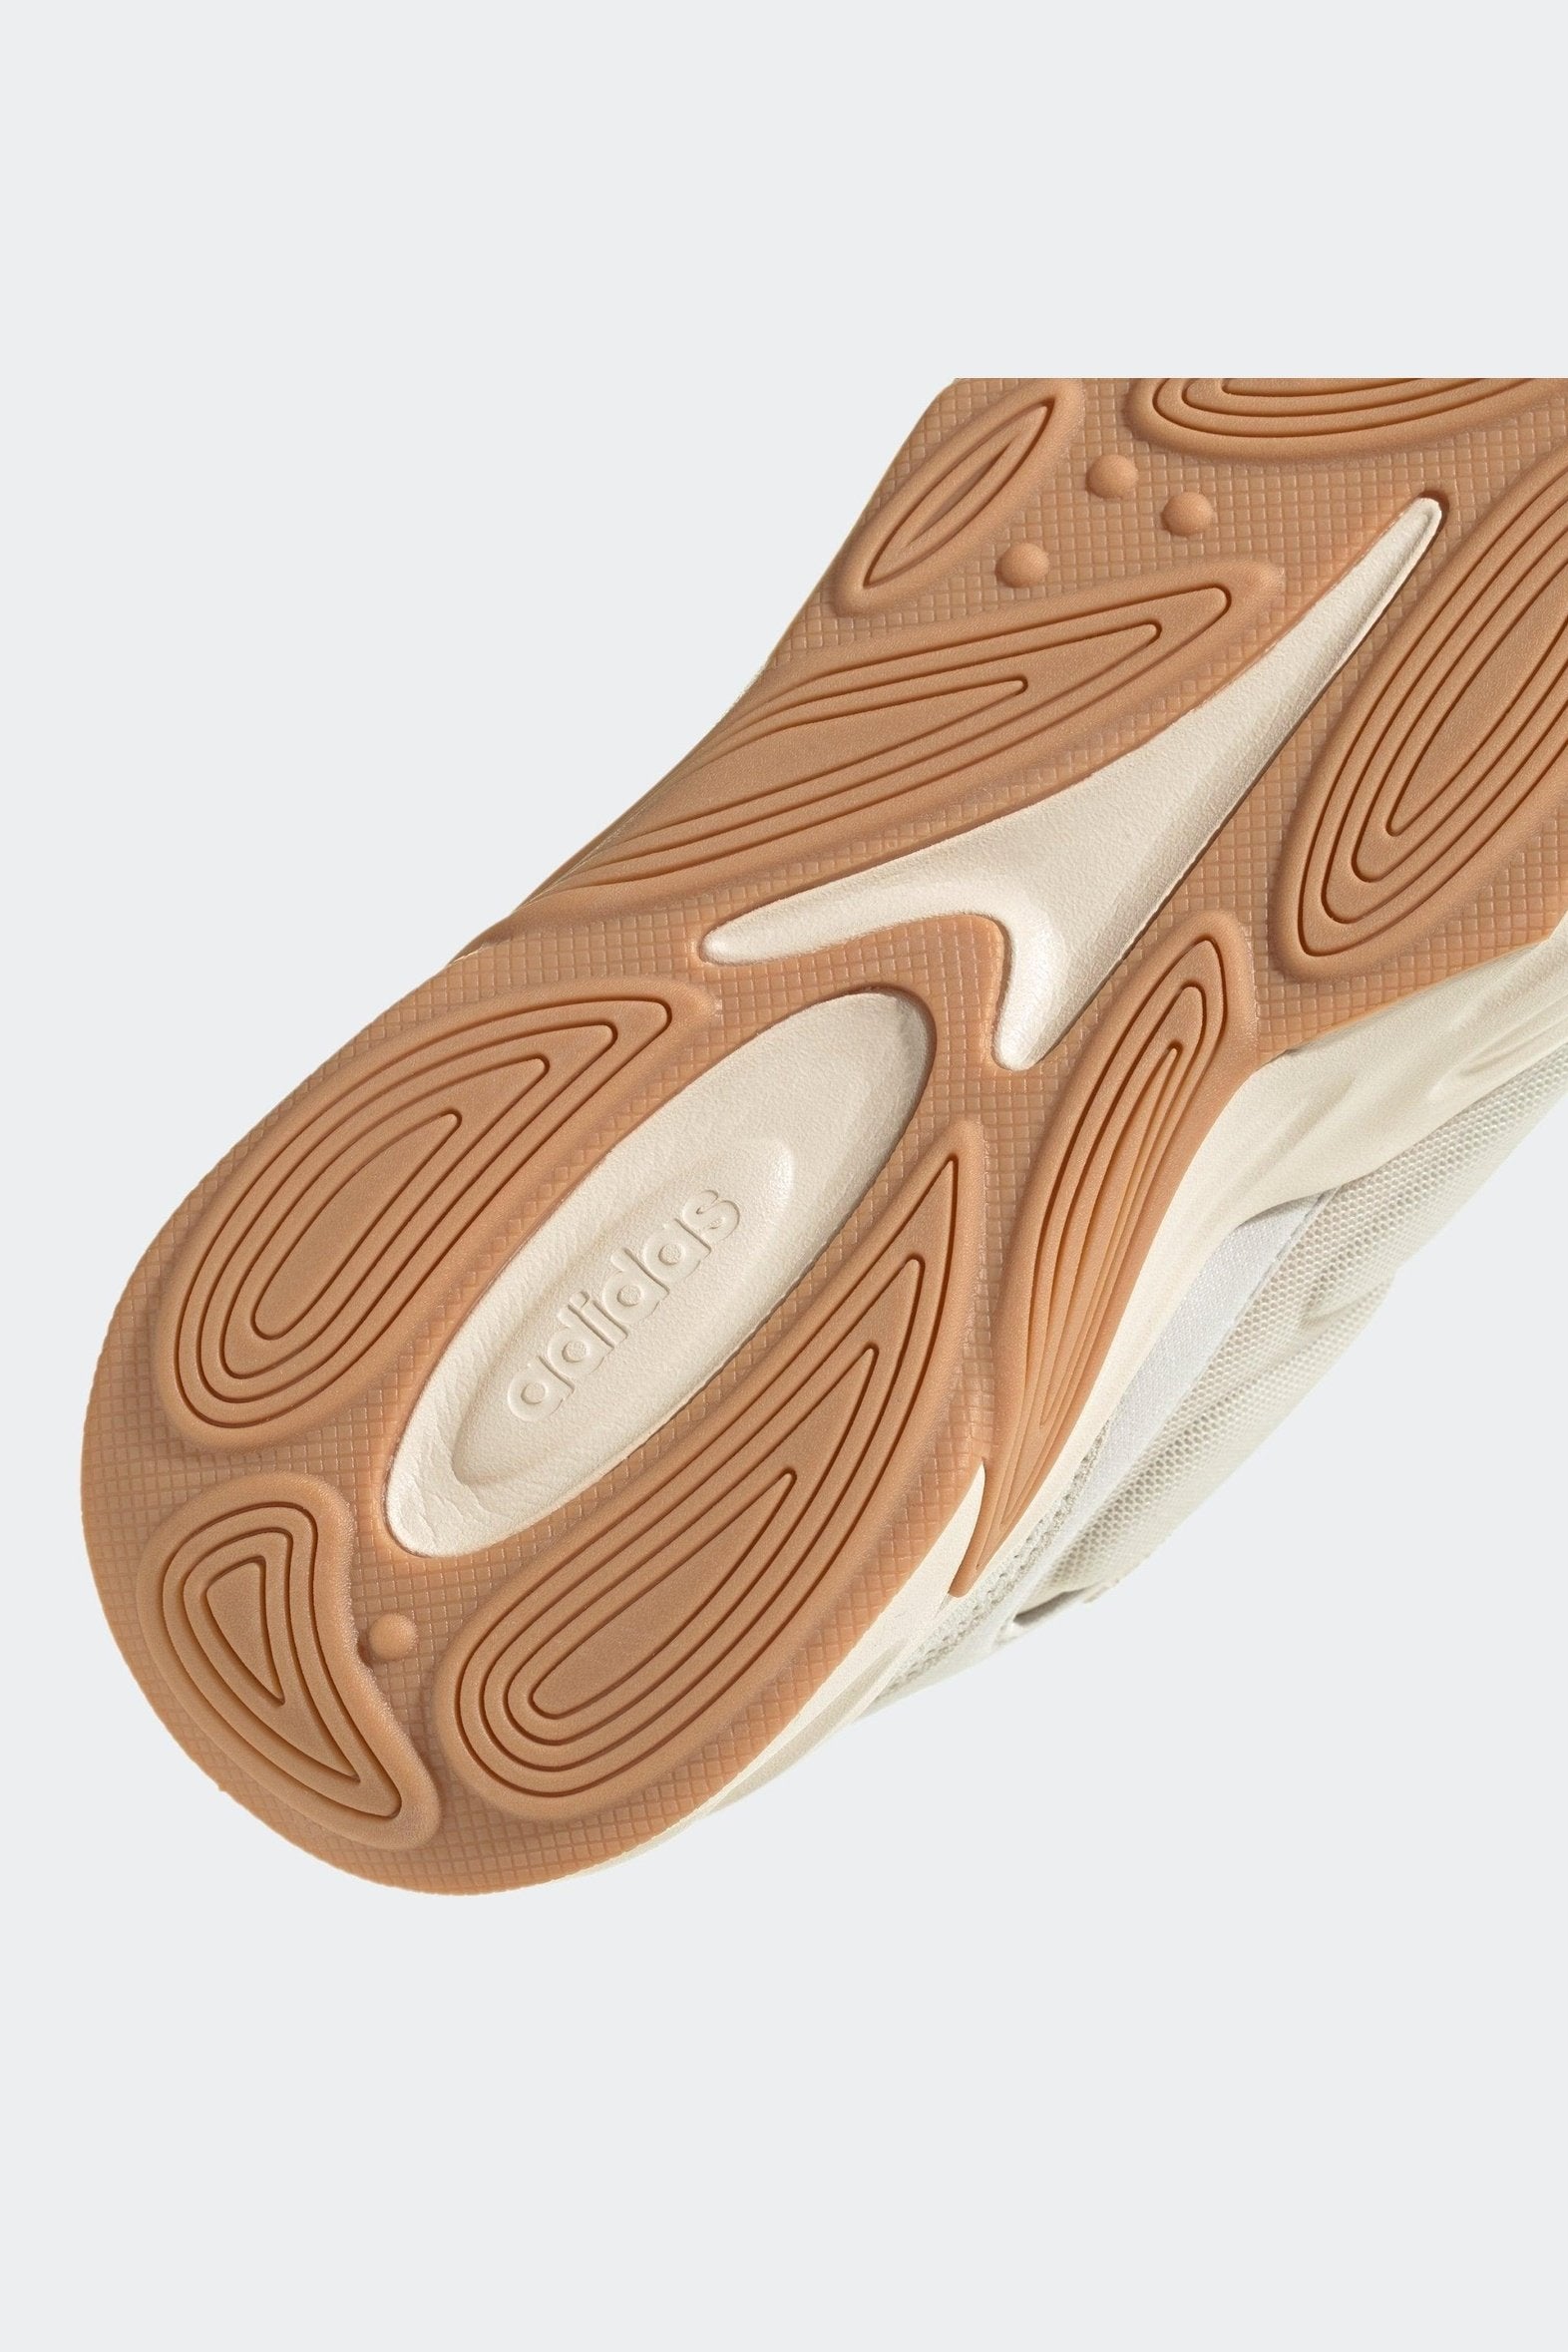 ADIDAS - נעל ספורט OZELLE בצבע בז' - MASHBIR//365